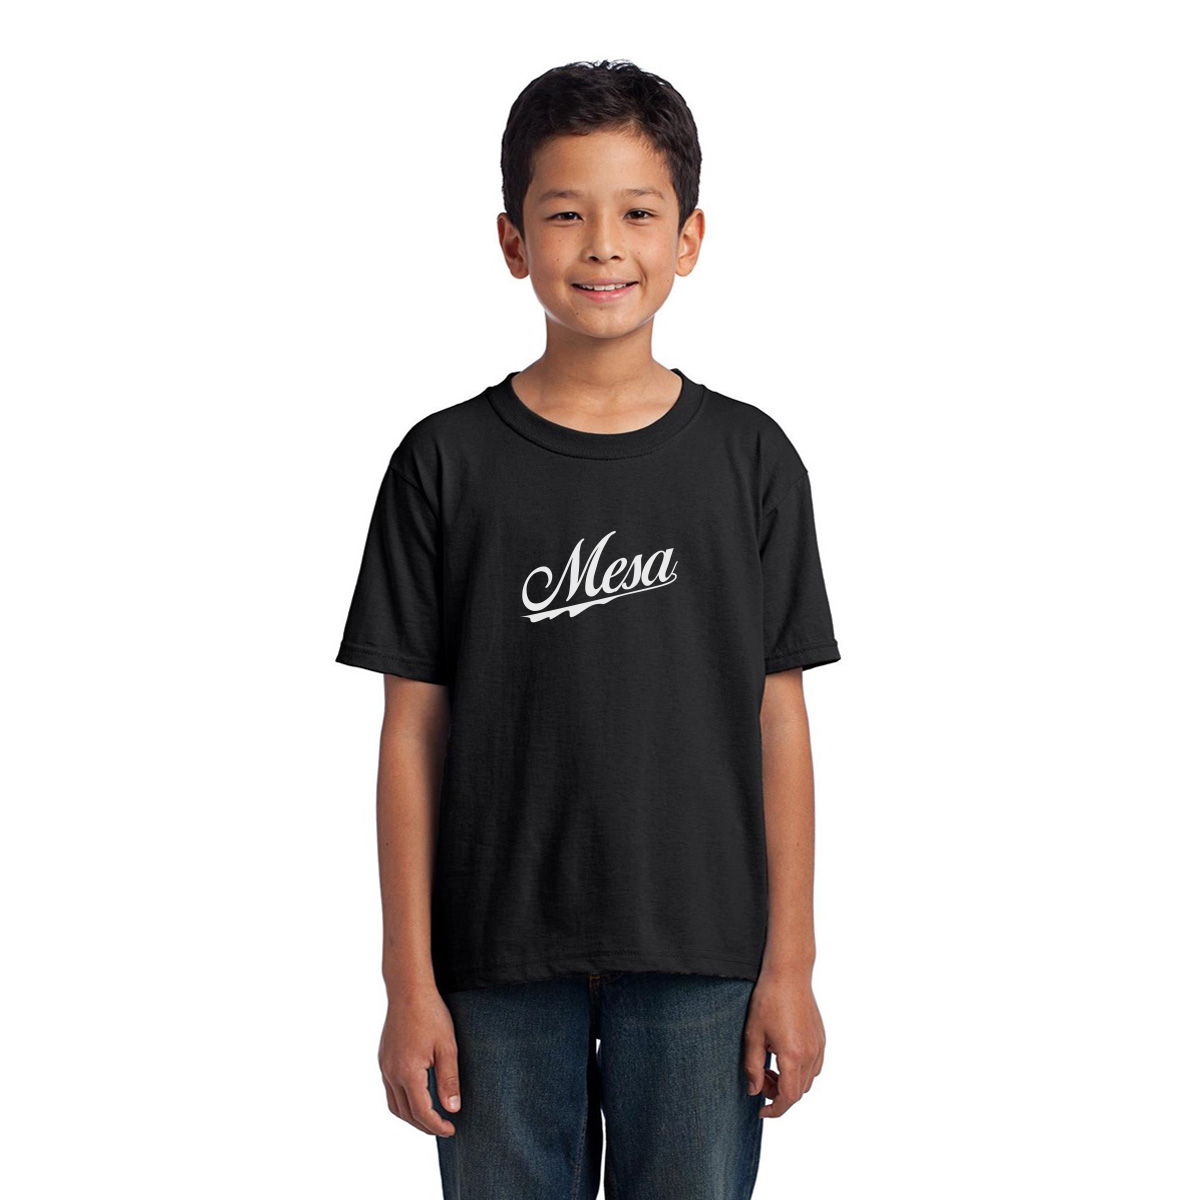 Mesa Kids T-shirt | Black